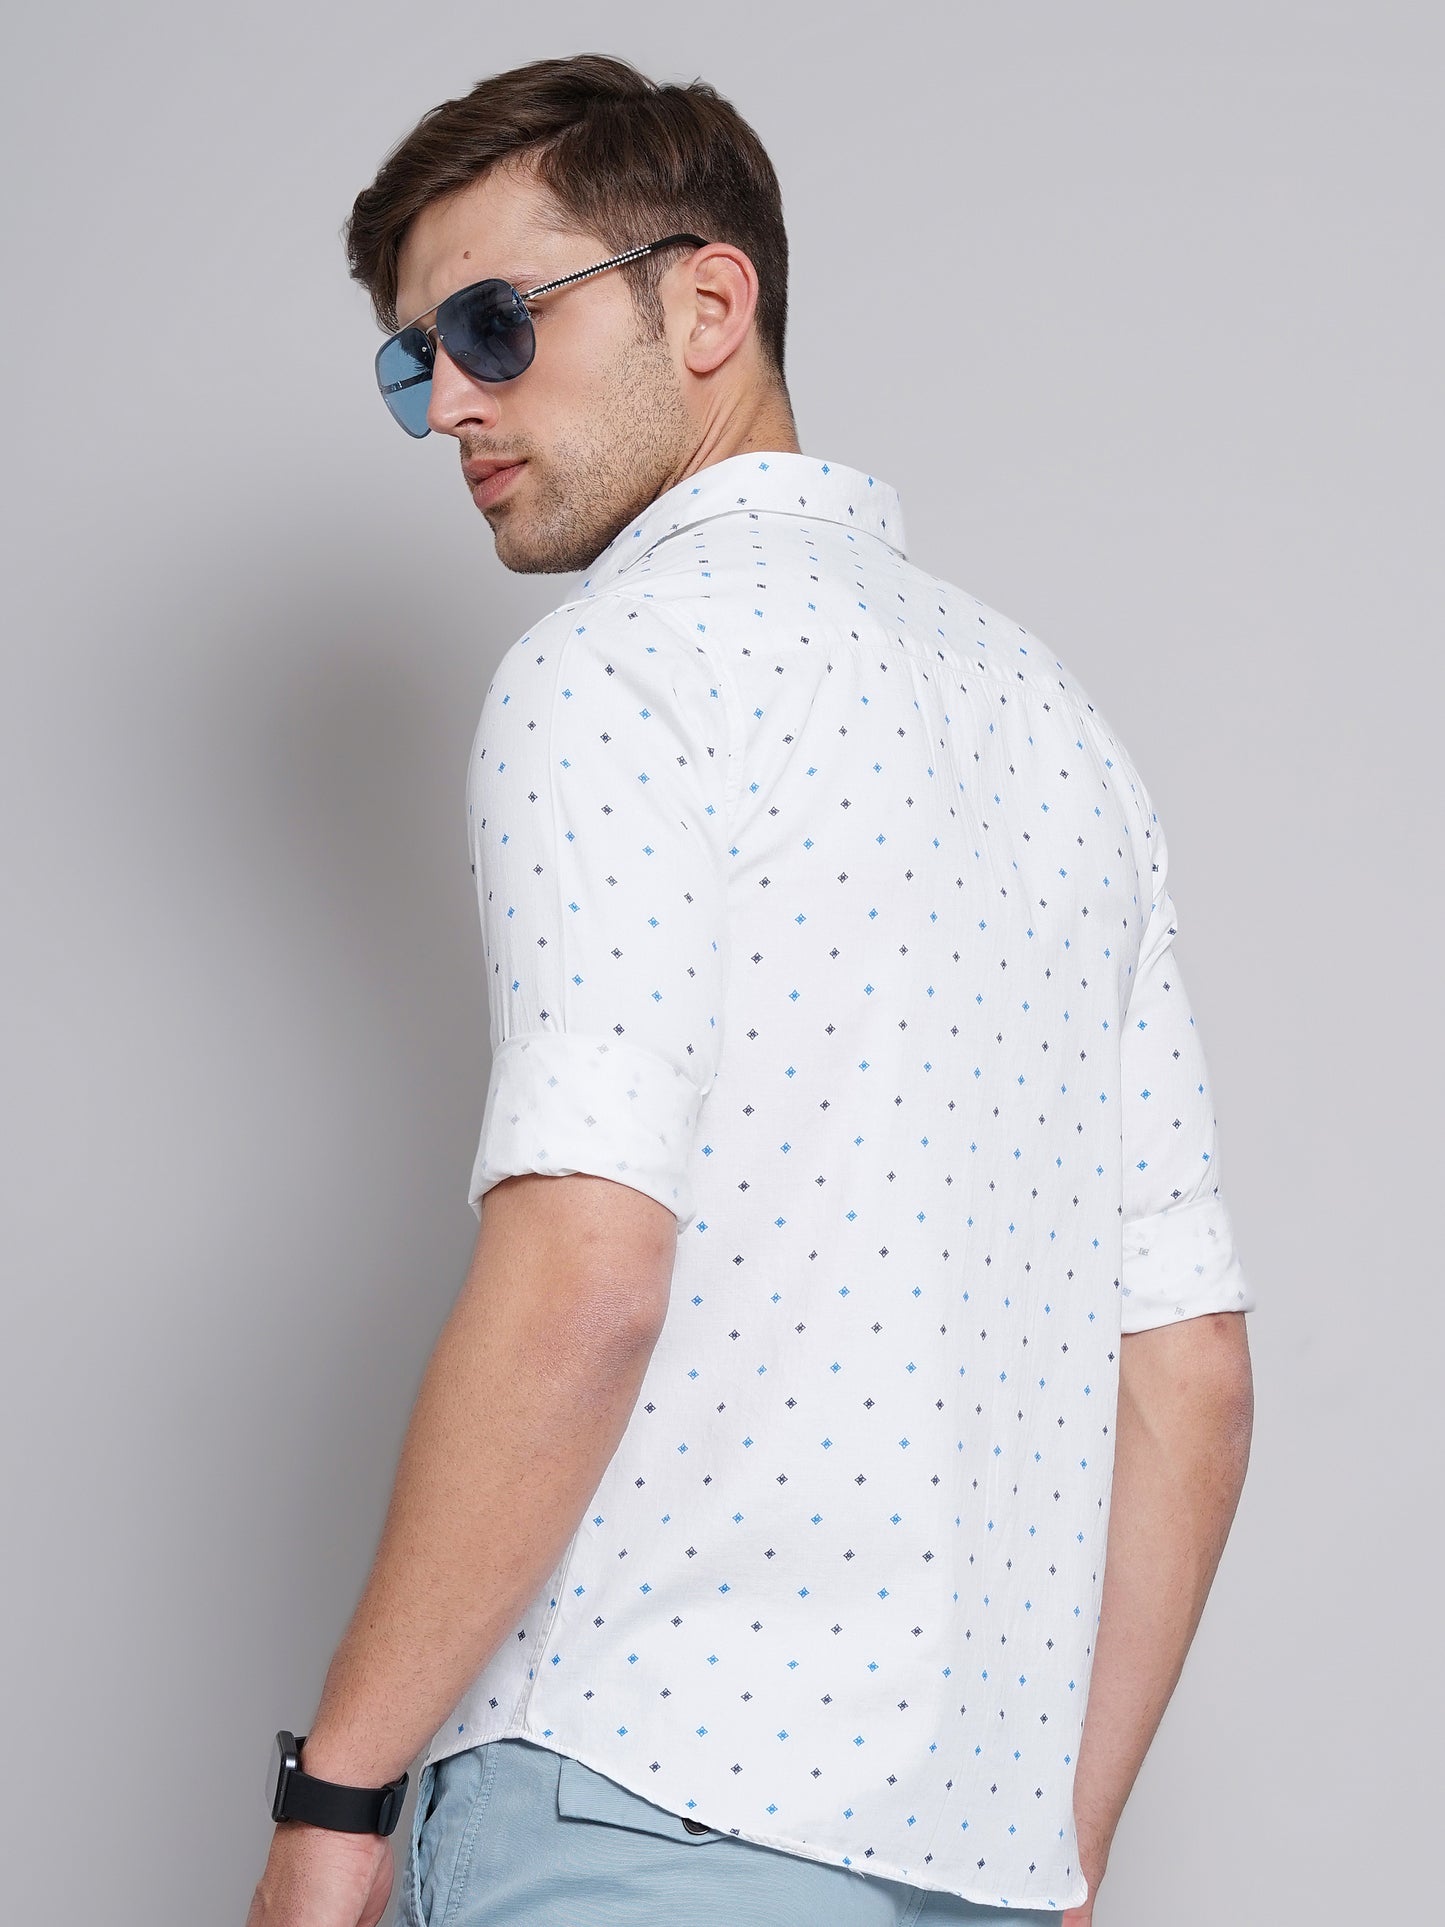 Blue & Grey Polka Dot Printed Shirt for Men 